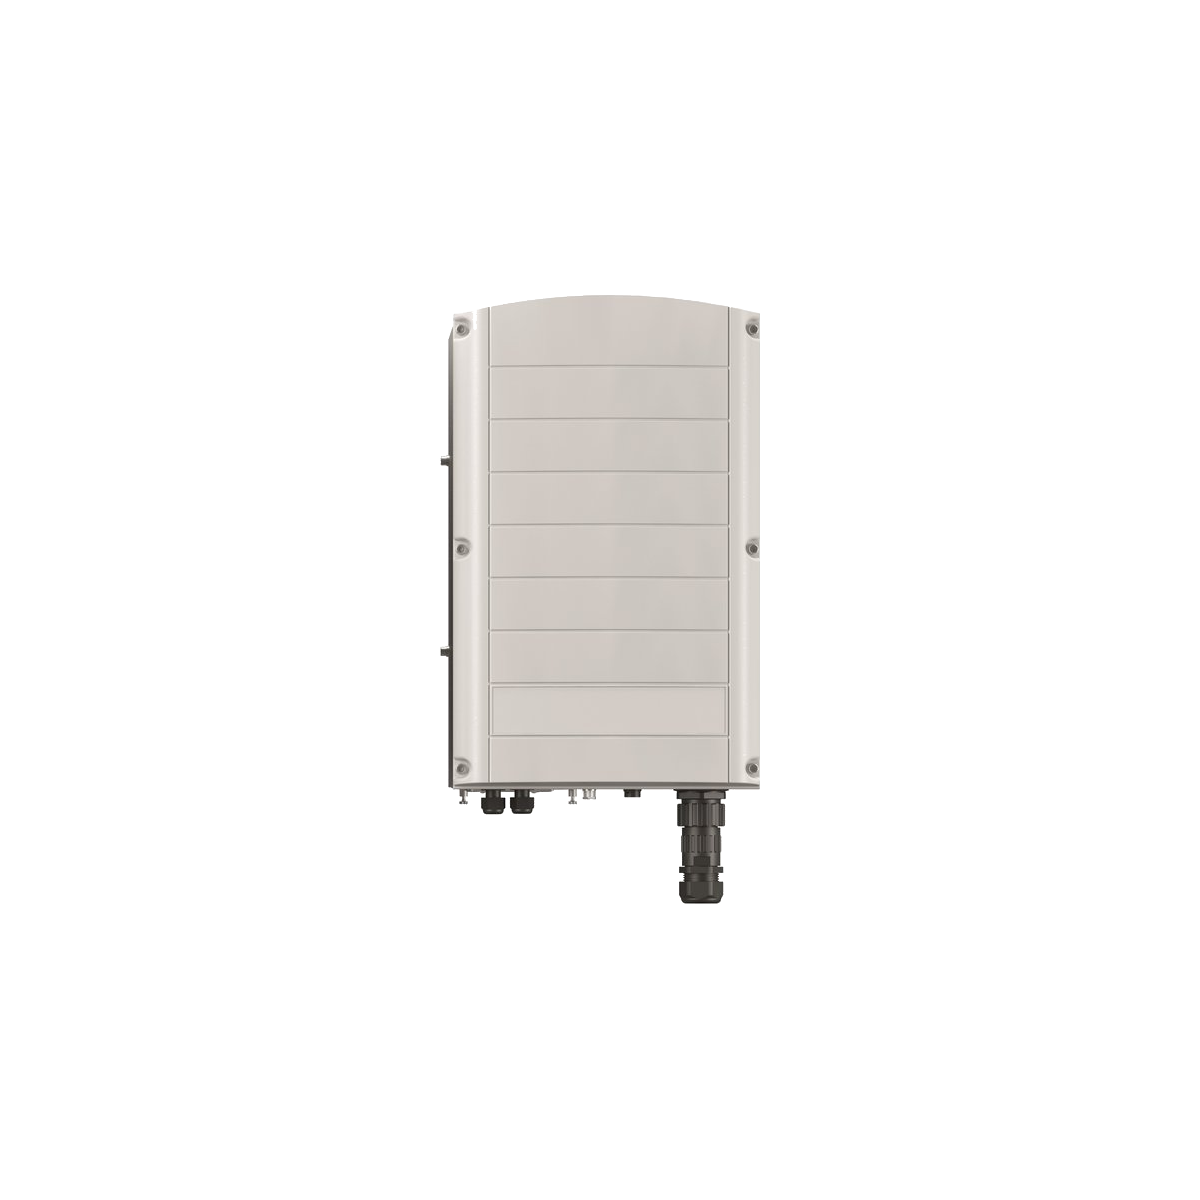 SolarEdge 3PH Inverter with Synergy Technology, Unit